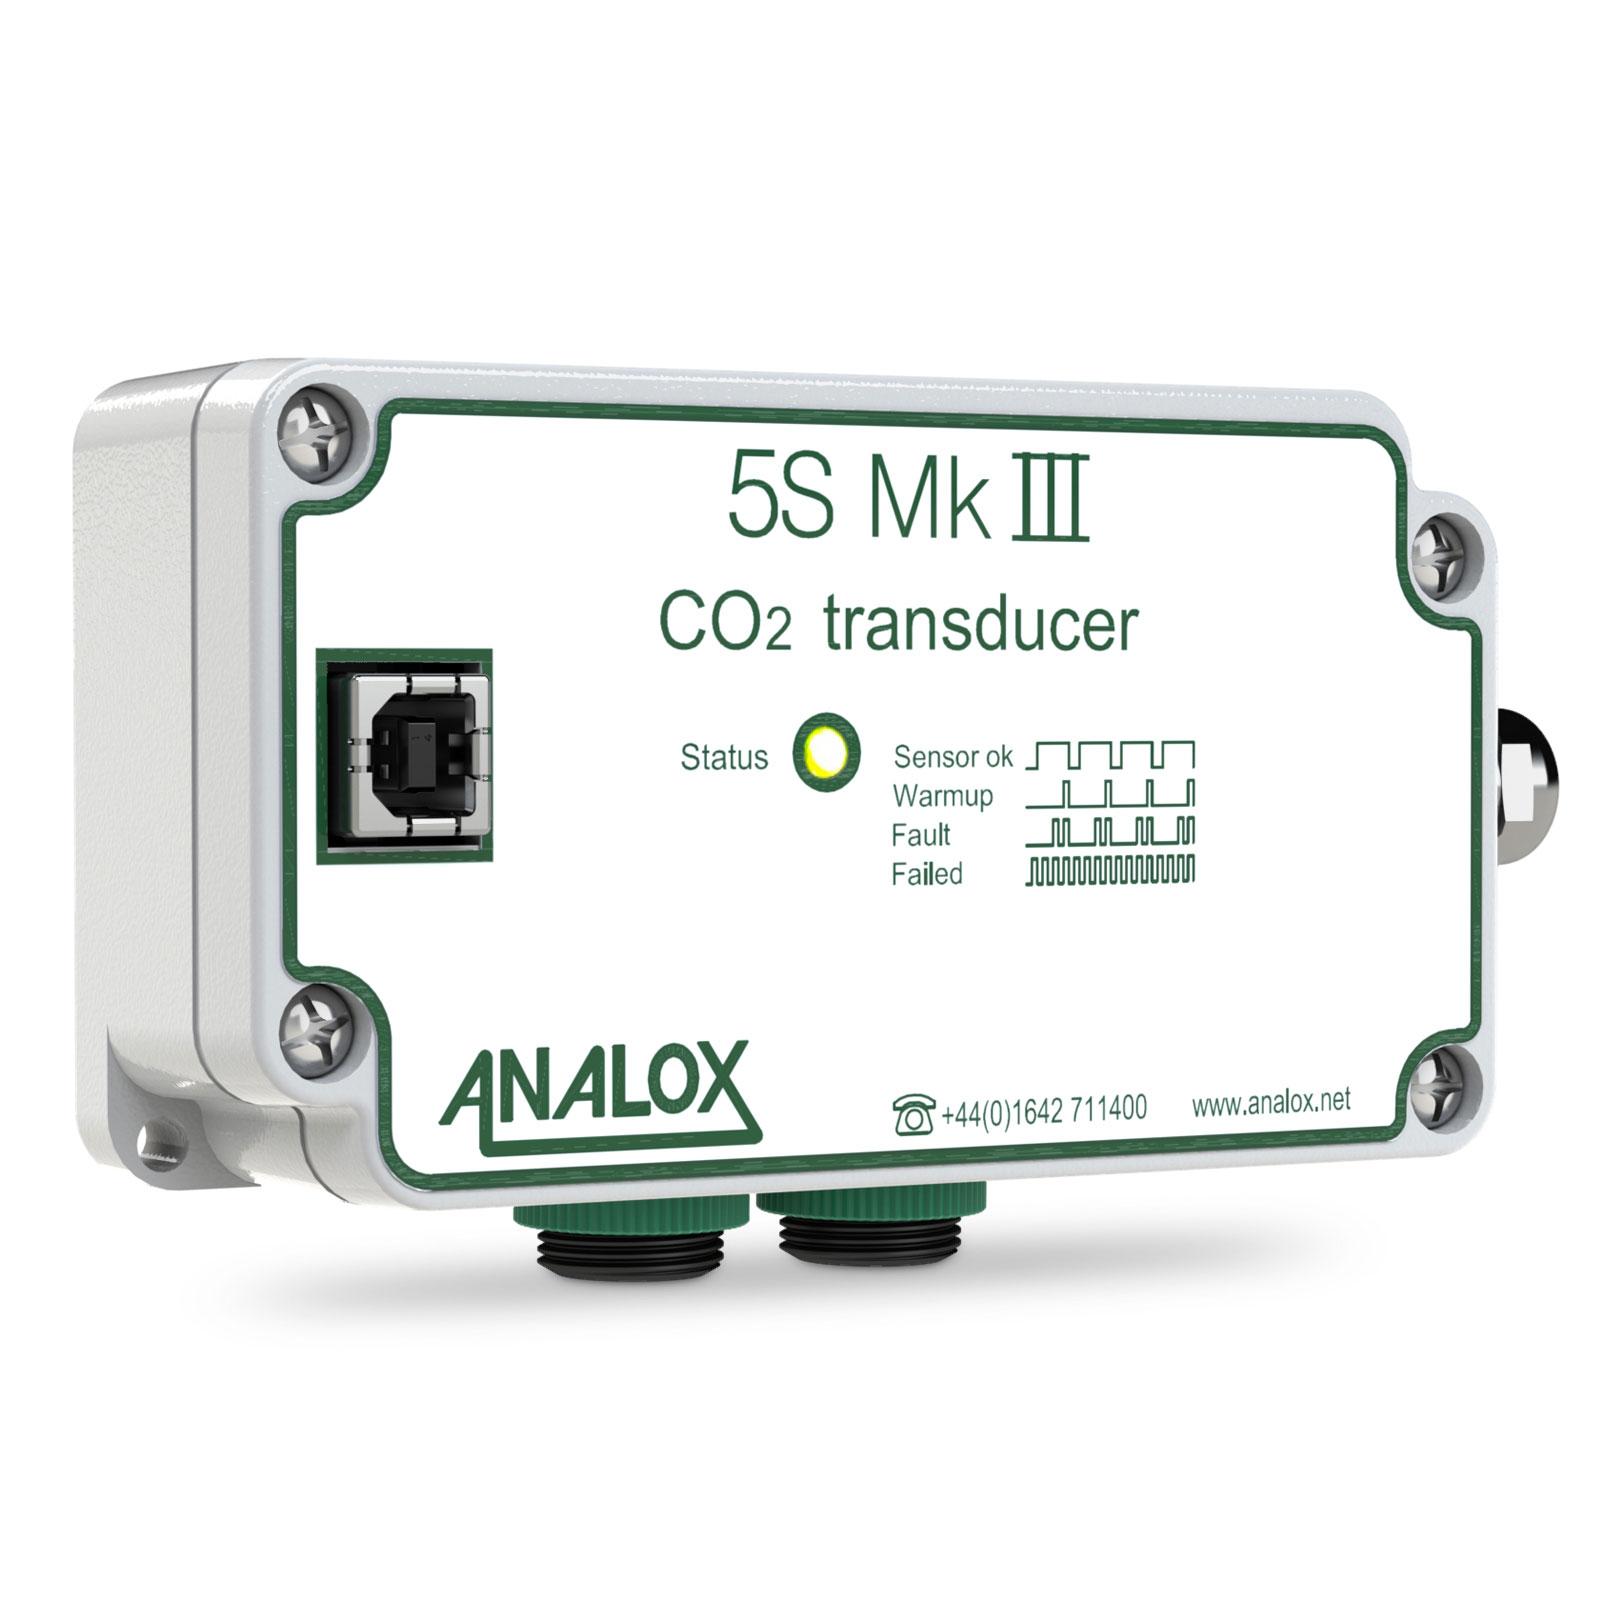 5S MKIII CO2 Transducer